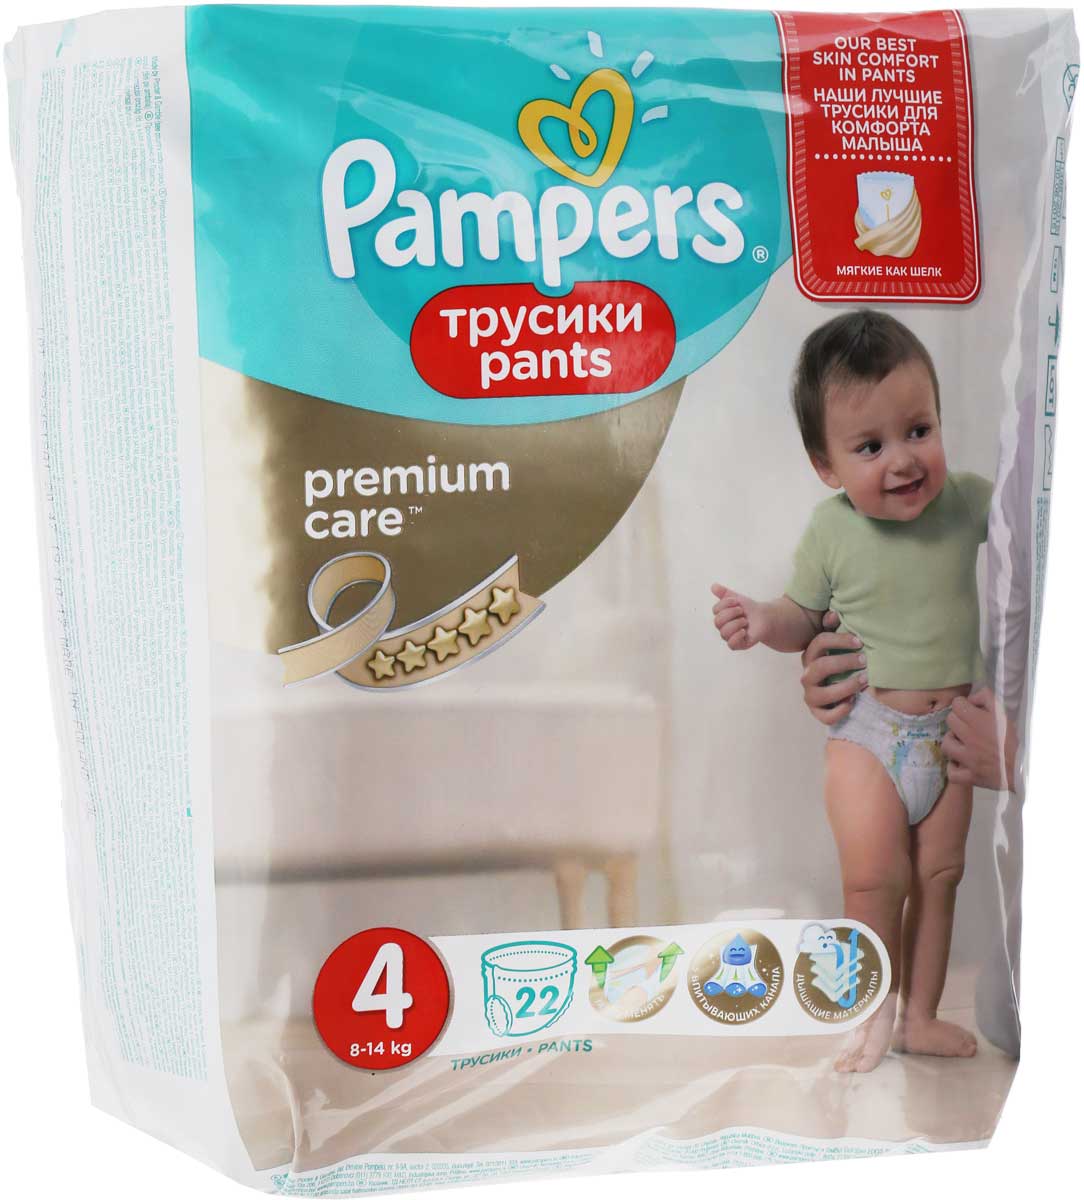 Pampers Pants Трусики Premium Care 9-14 кг (размер 4) 22 шт